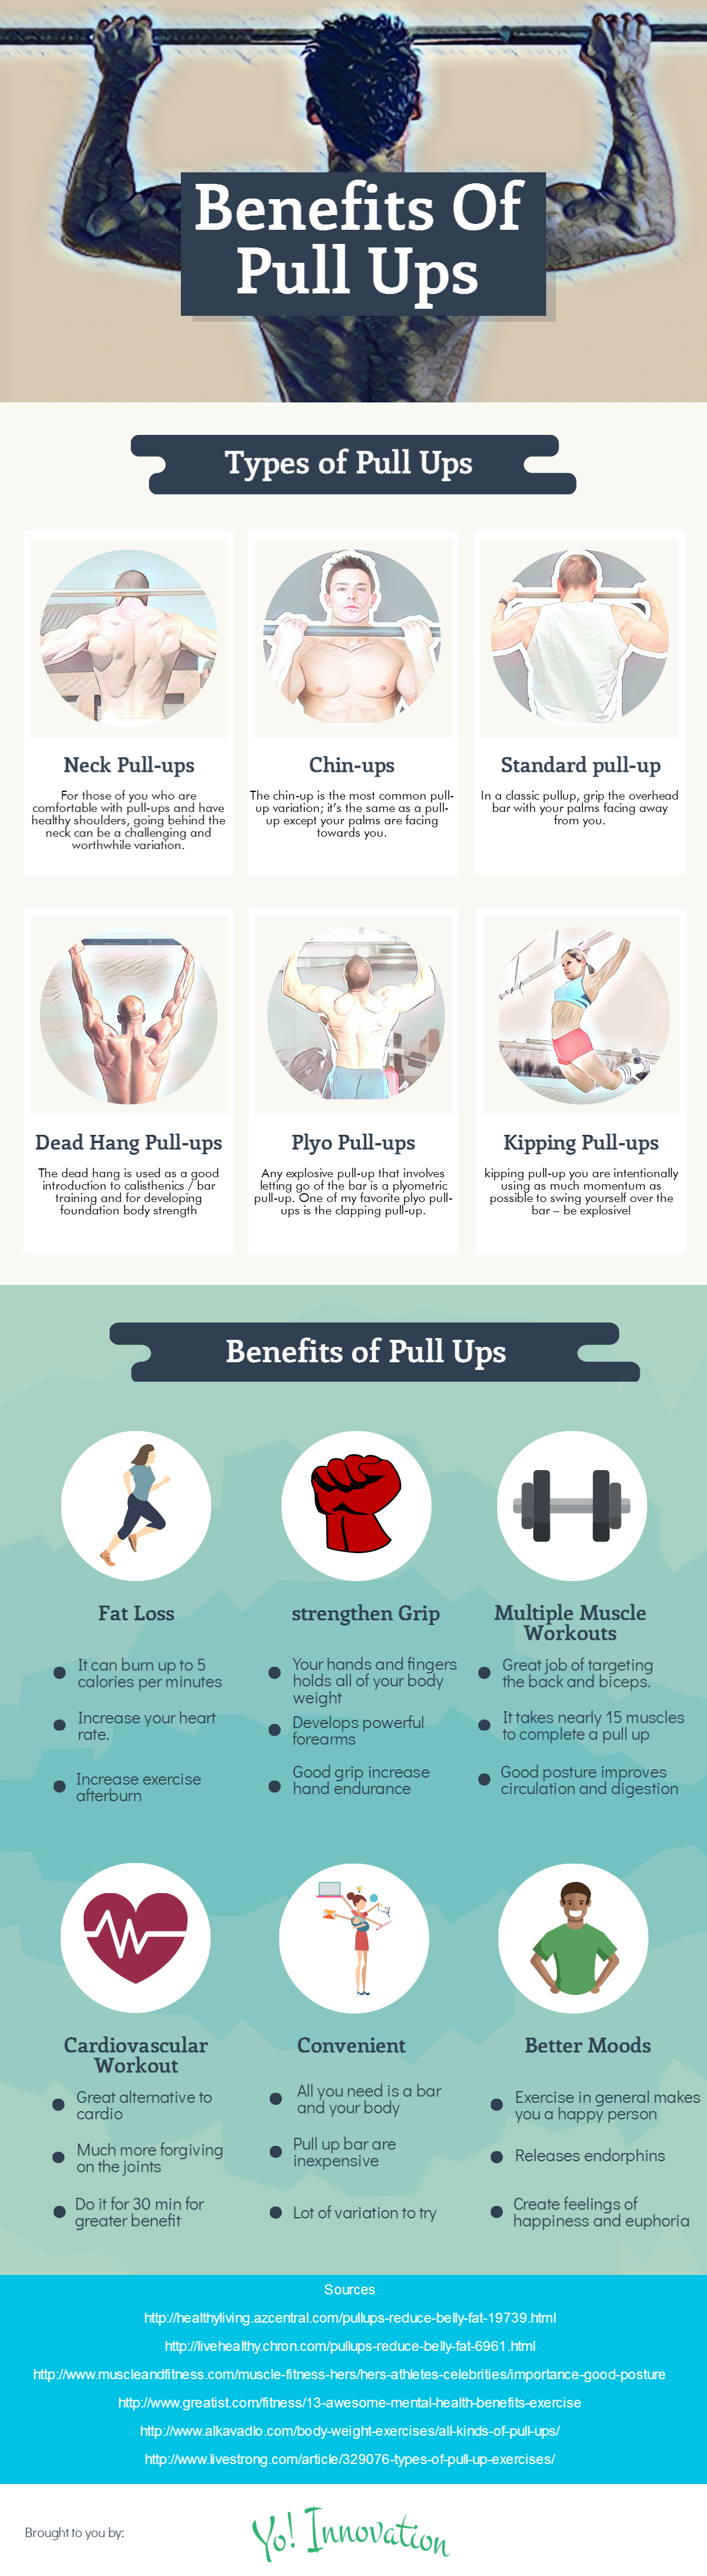 Benefits of Pull-ups